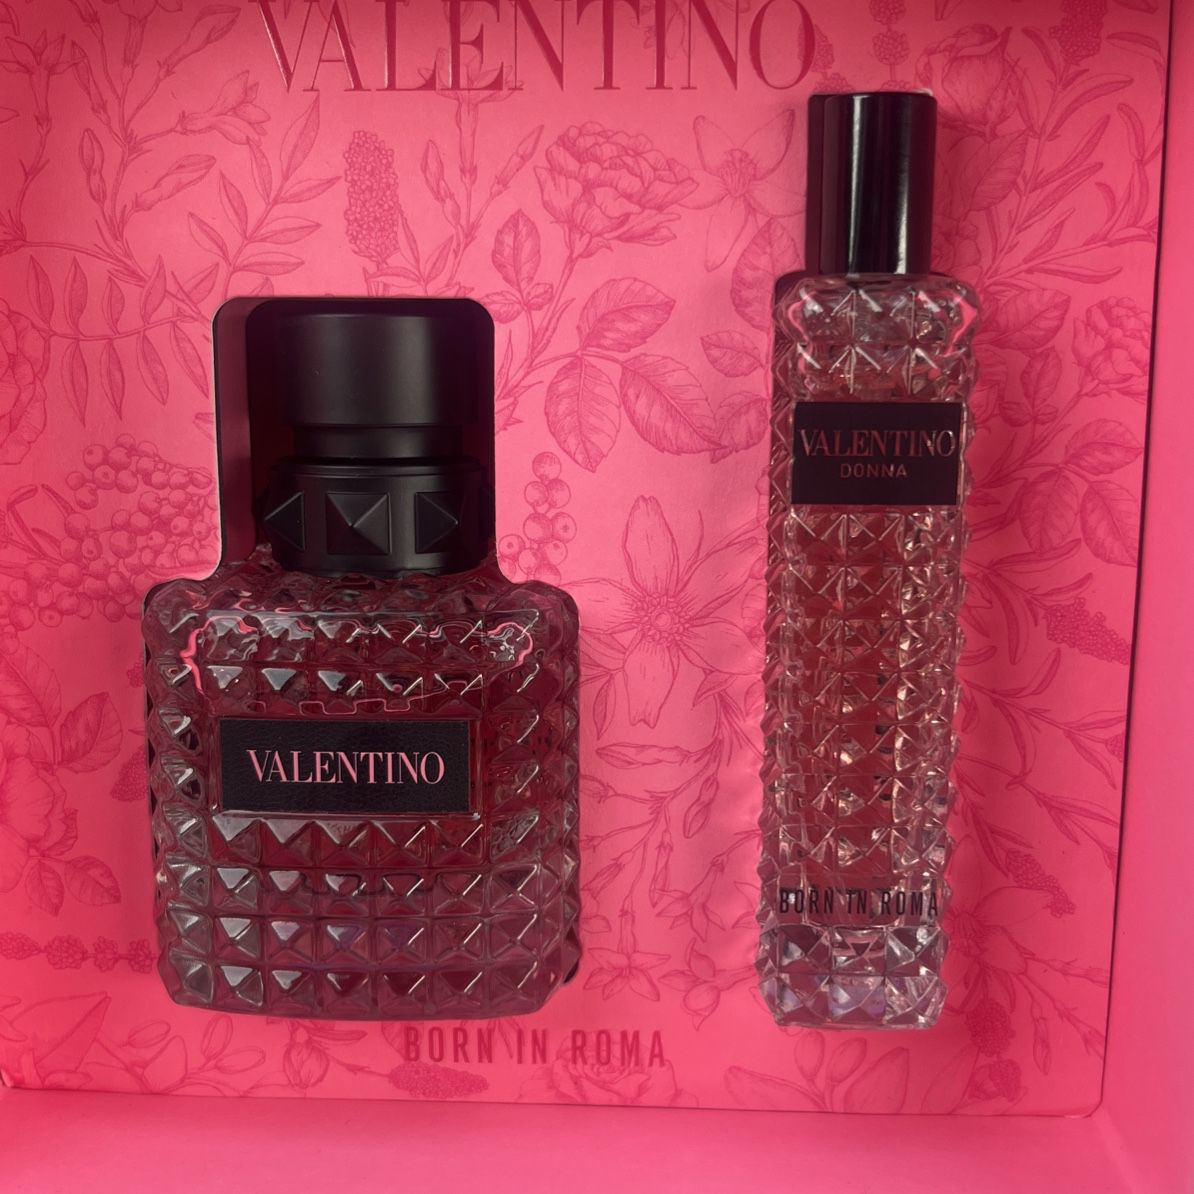 Valentino - Donna Born In Roma Eau de Parfum